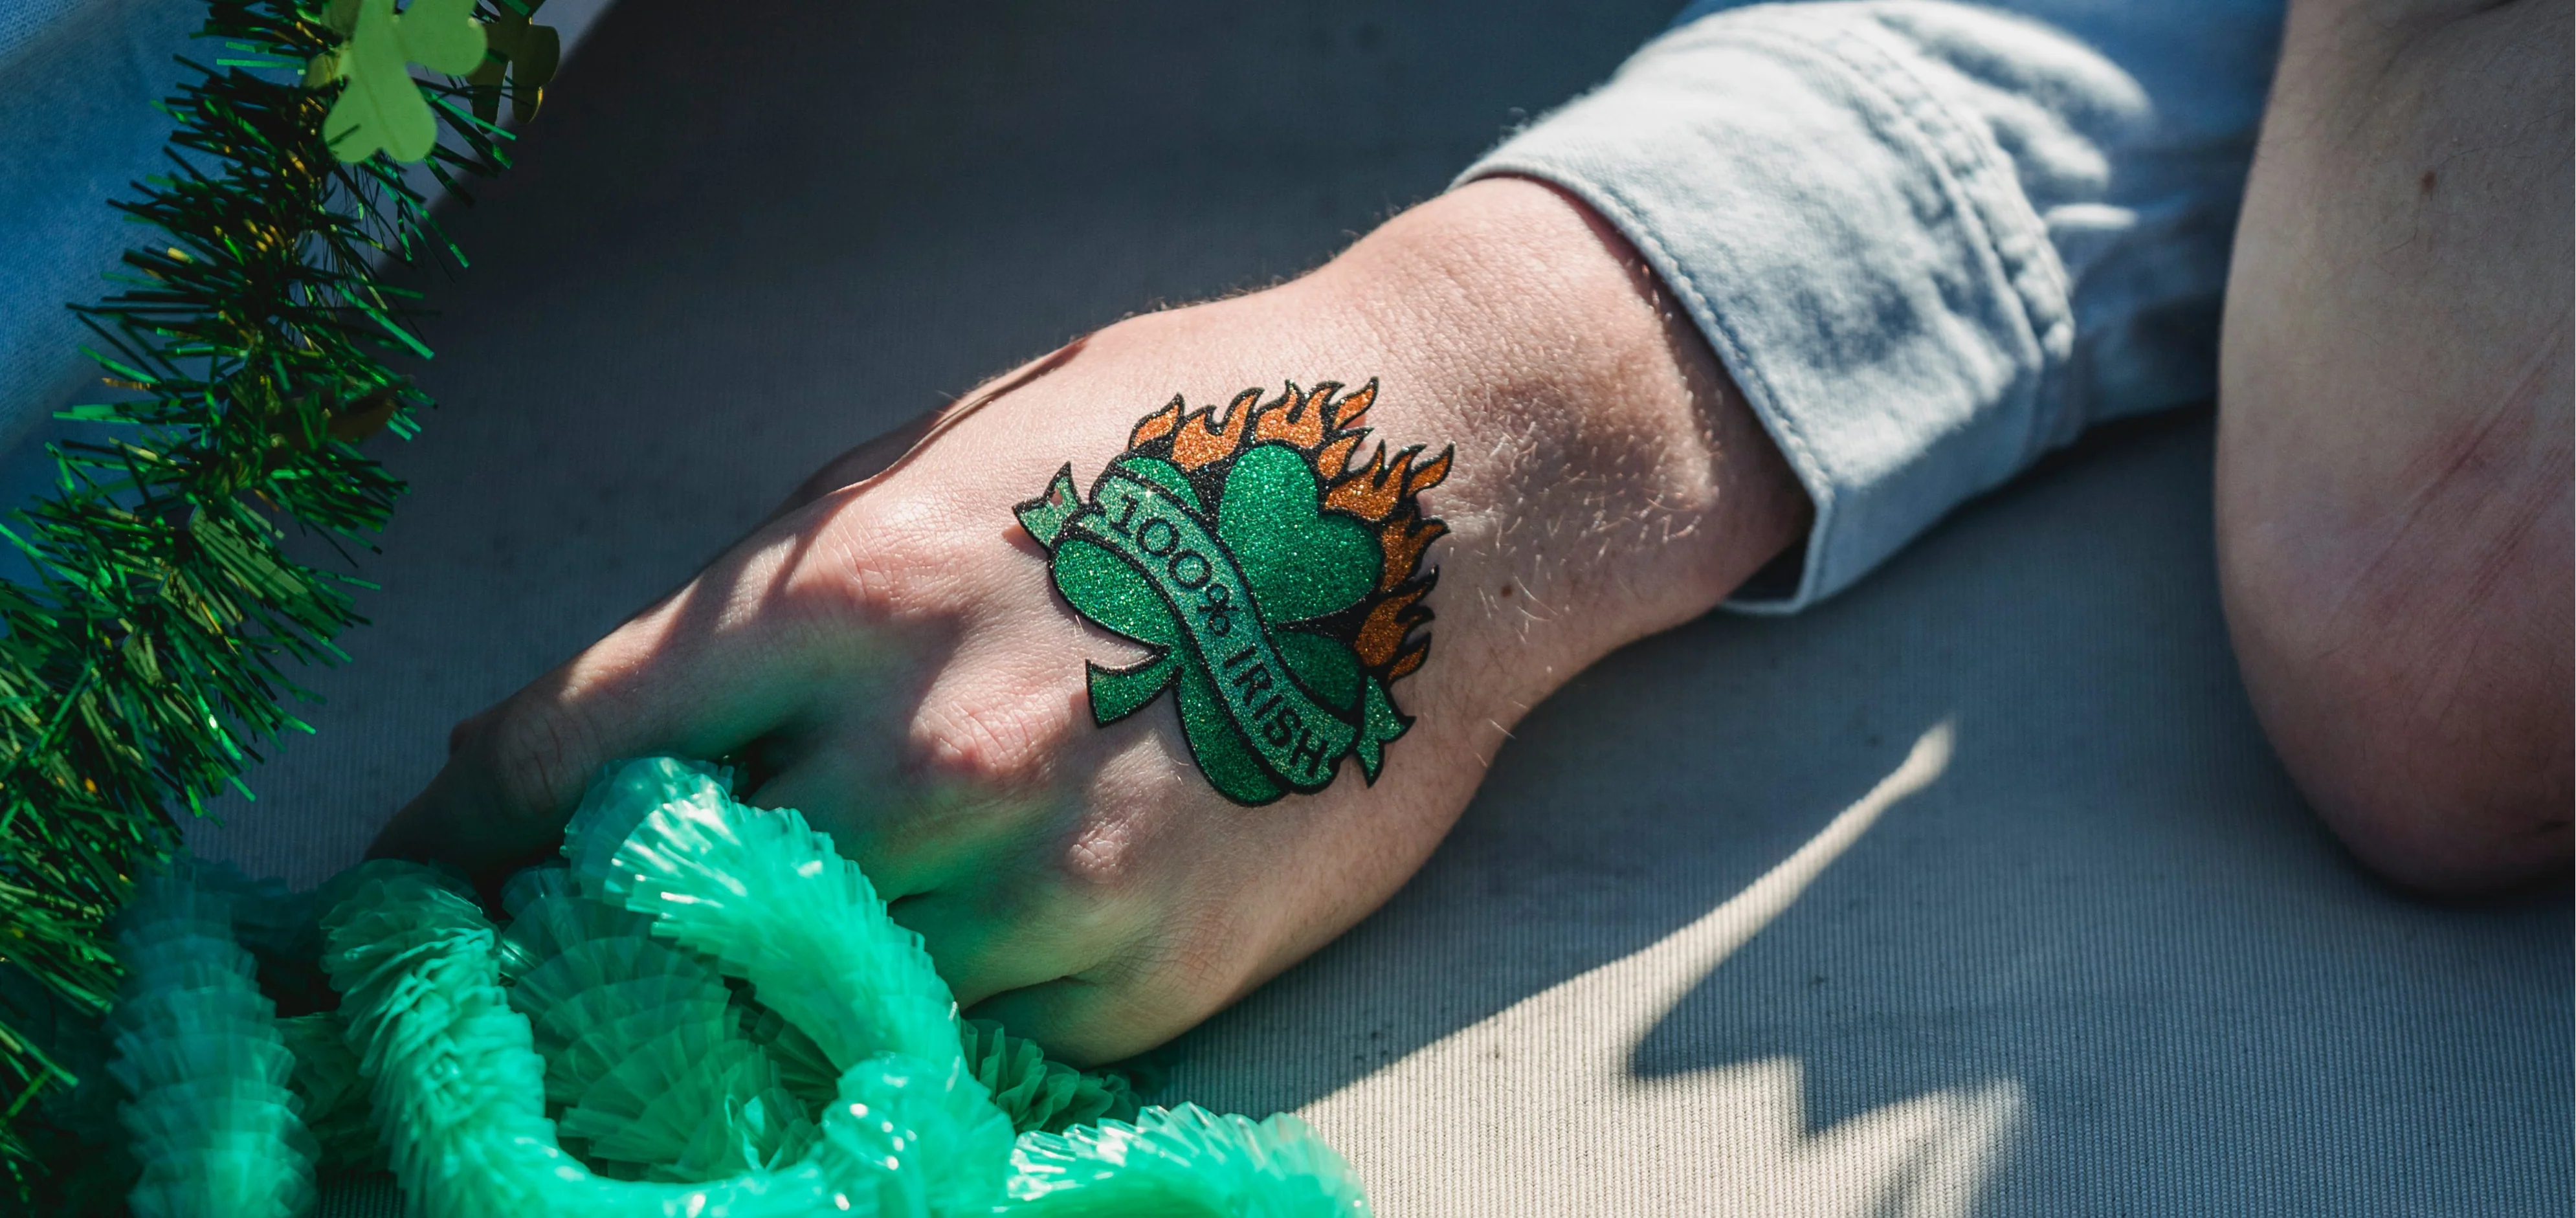 Historical Design of Irish Tattoos - The Black Hat Tattoo